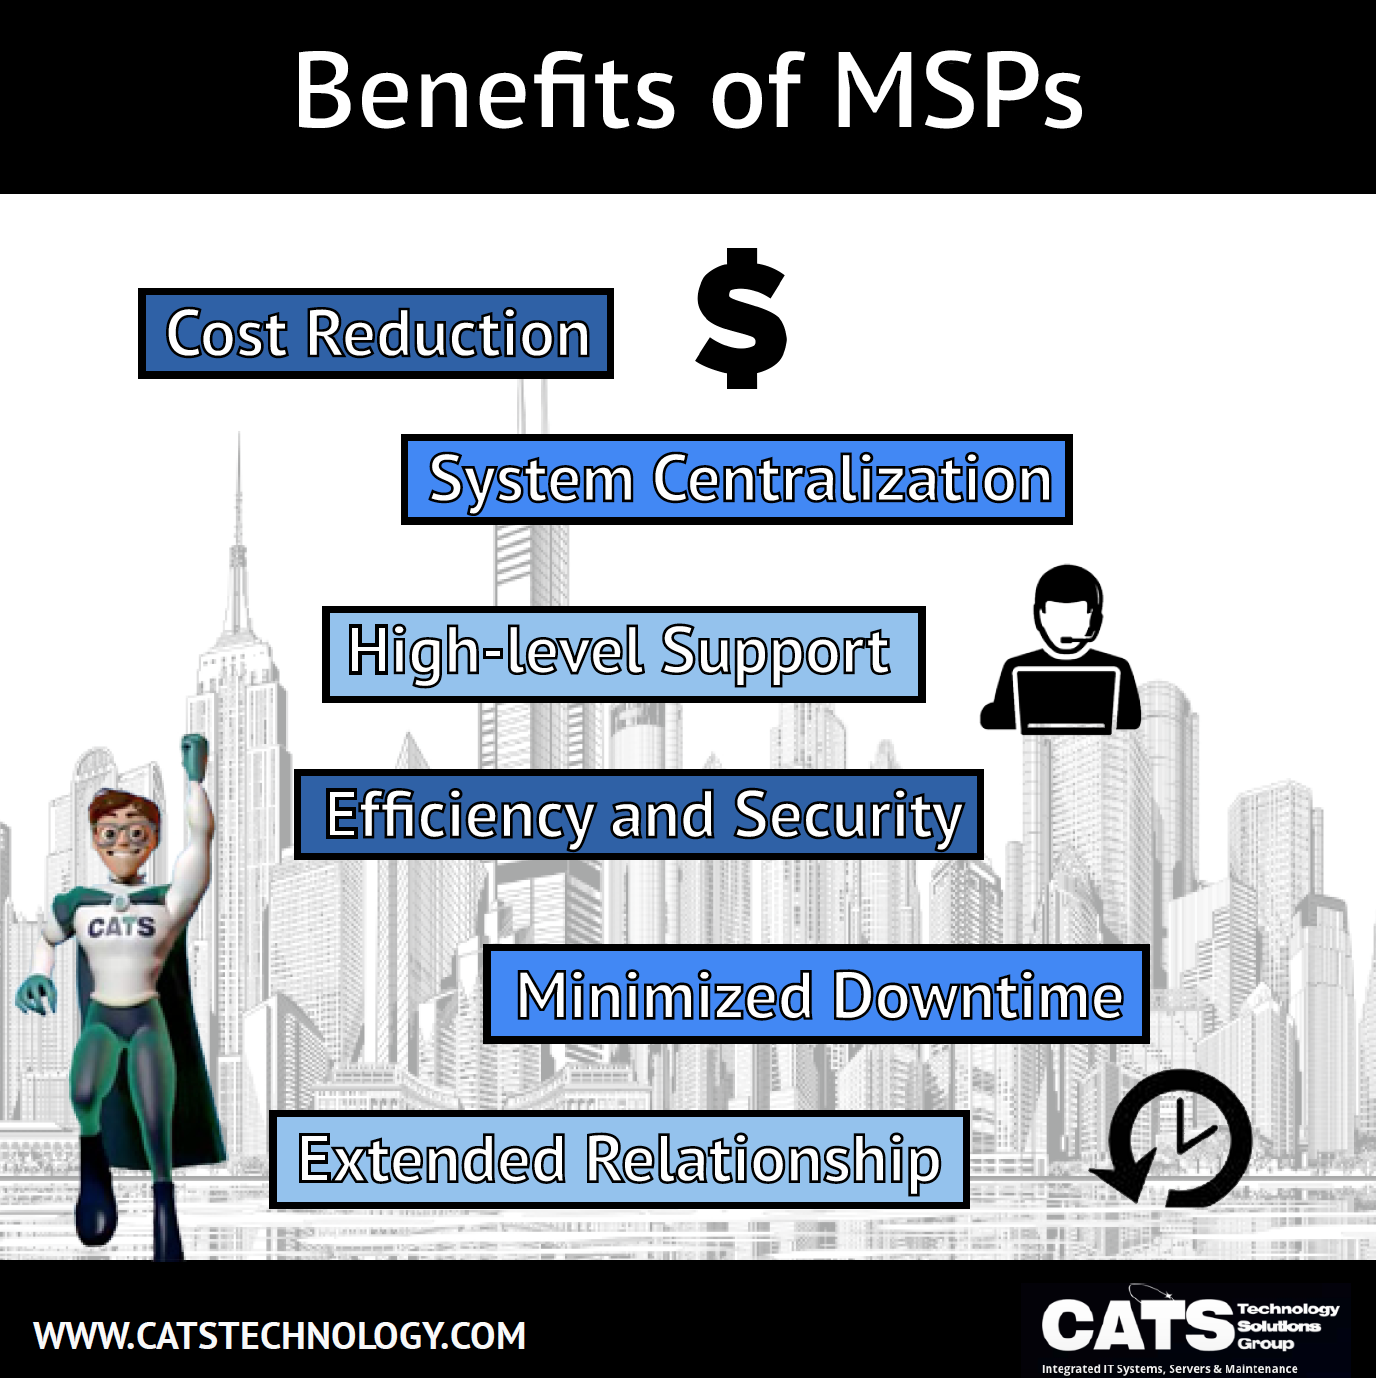 Benefits of MSPs